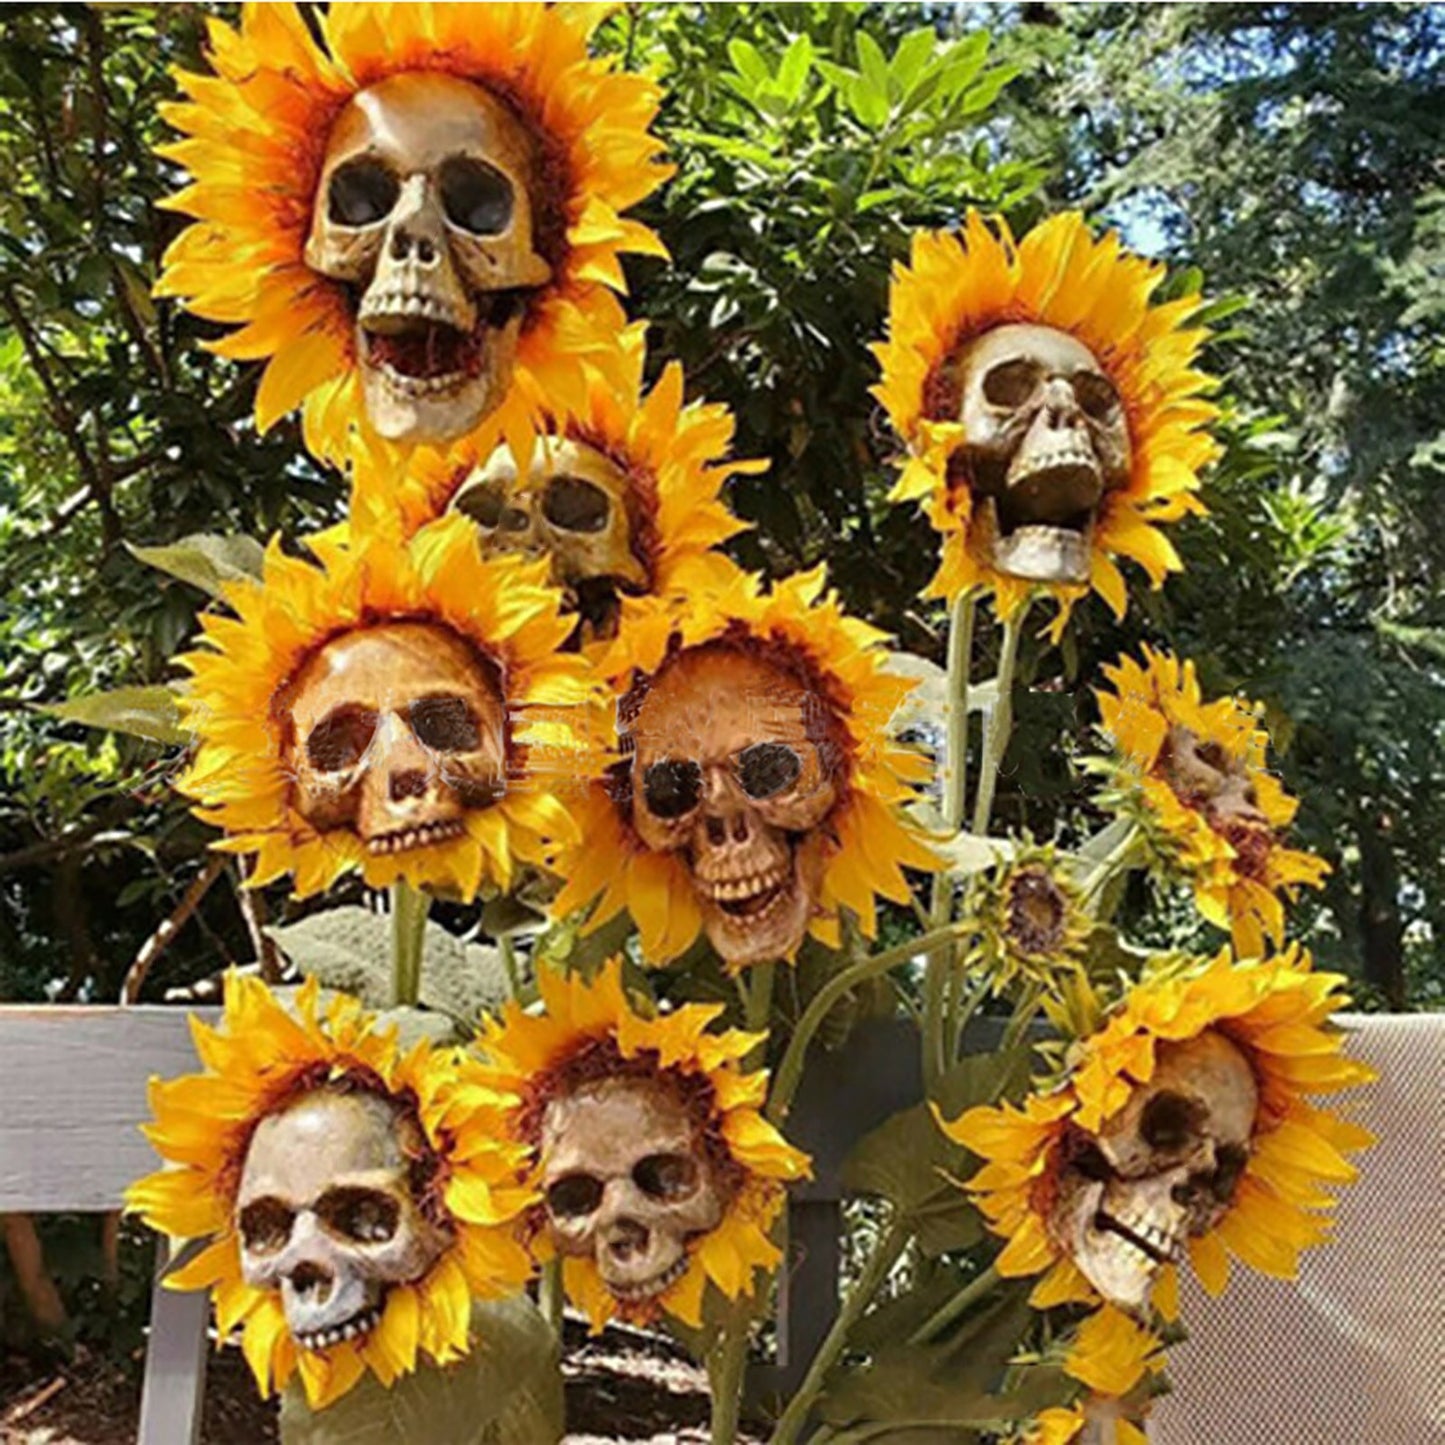 Qfdian New Garden Decoration Skull Head Sunflower Statues Outdoor Creative Garden Ornament Party Garden Skull Sunflower Decoration